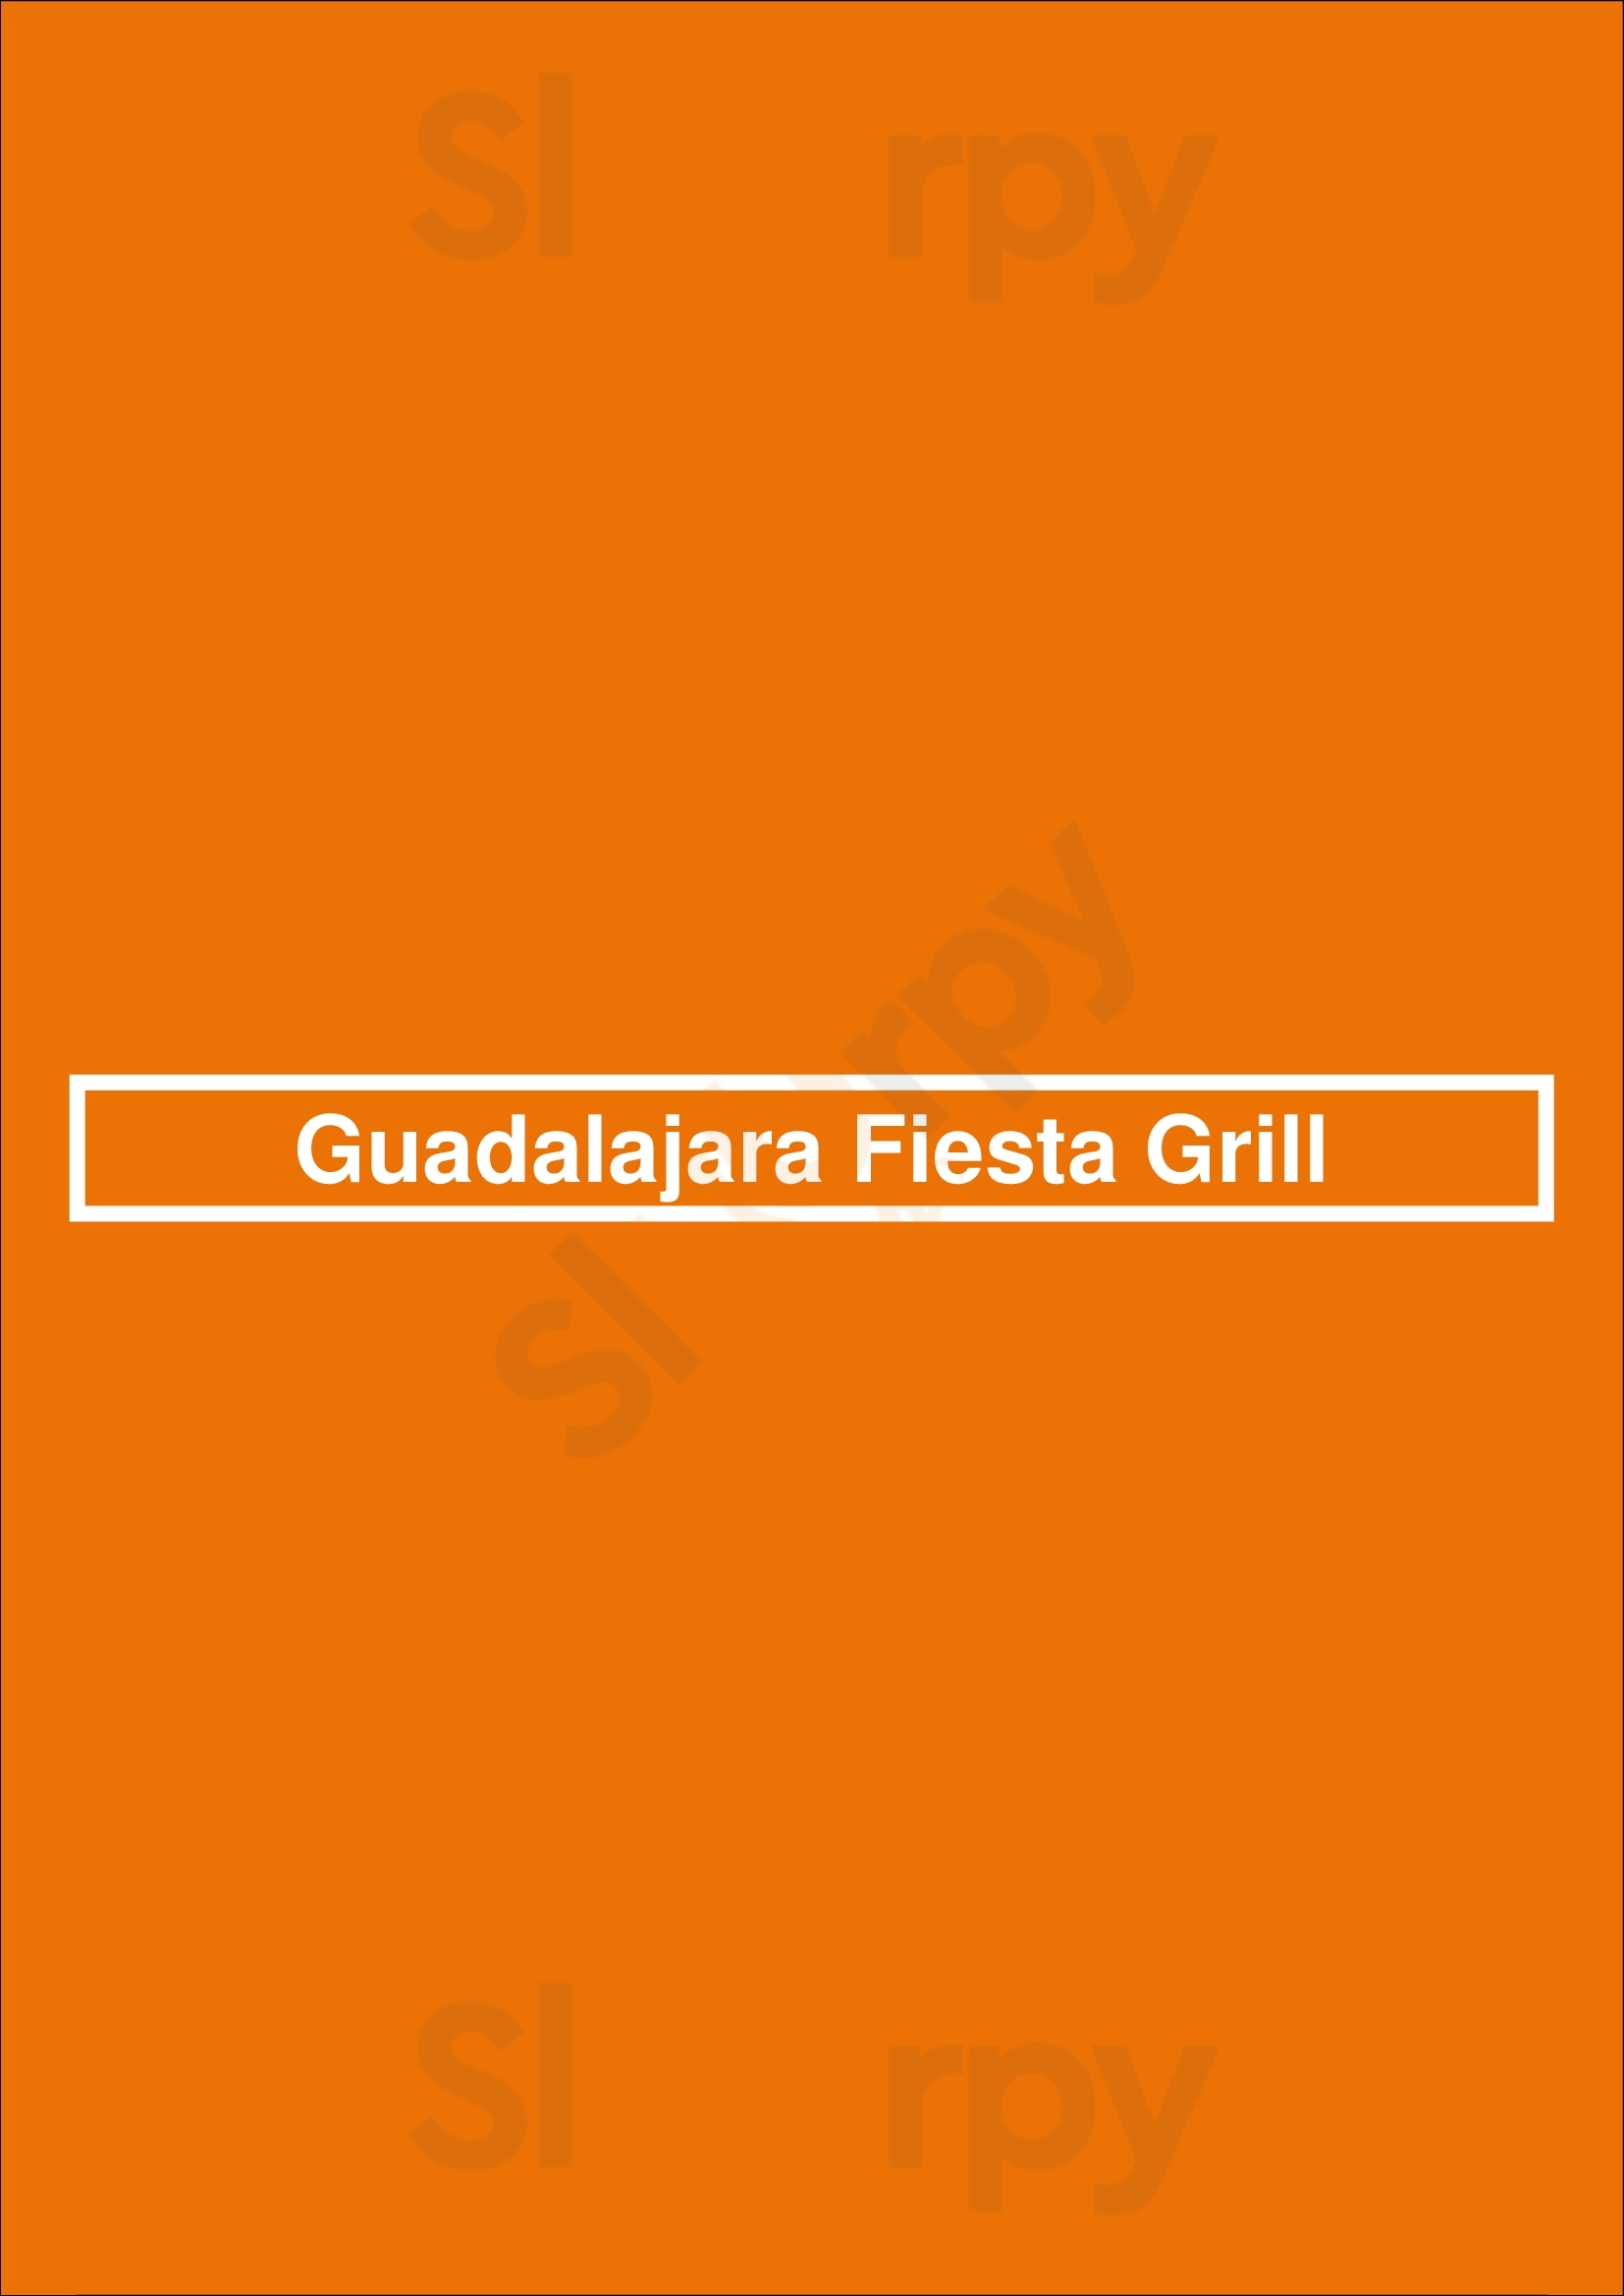 Guadalajara Grill - Fiesta, Best Mexican Restaurant In Tucson Tucson Menu - 1